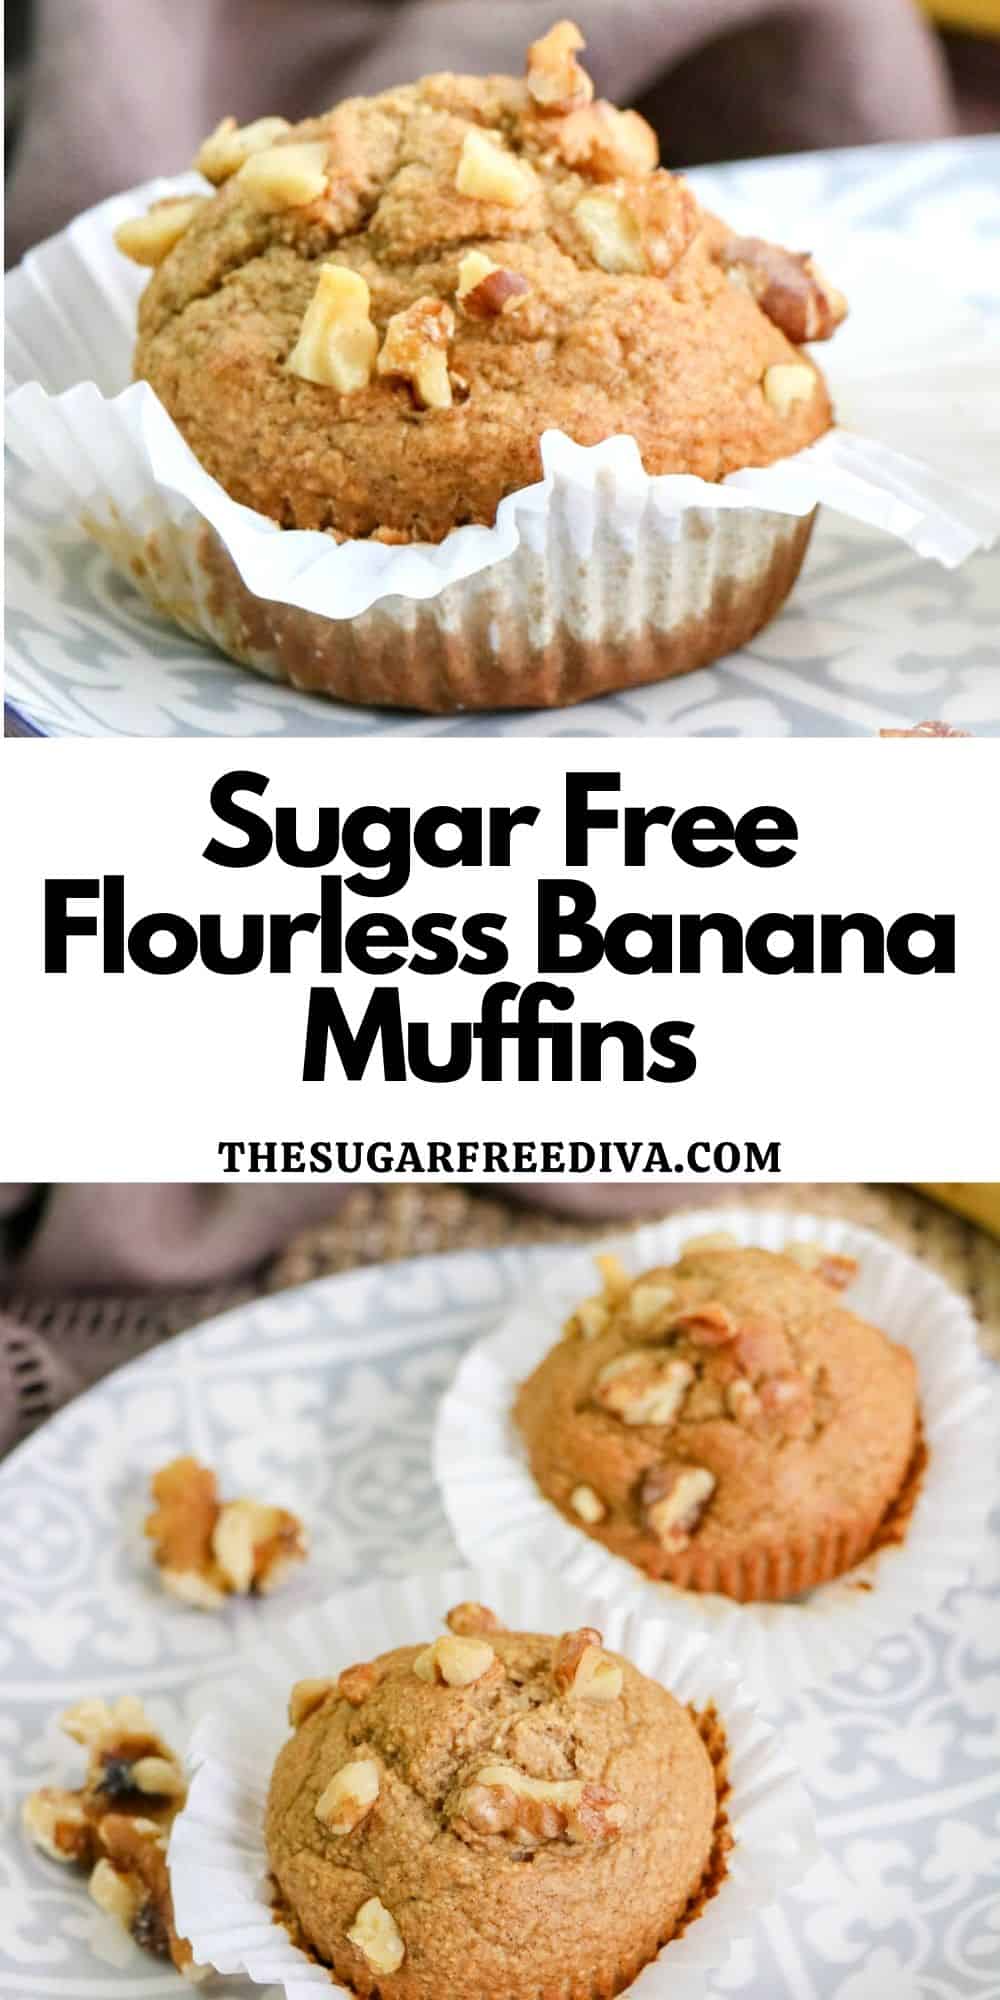 Sugar Free Flourless Banana Muffins